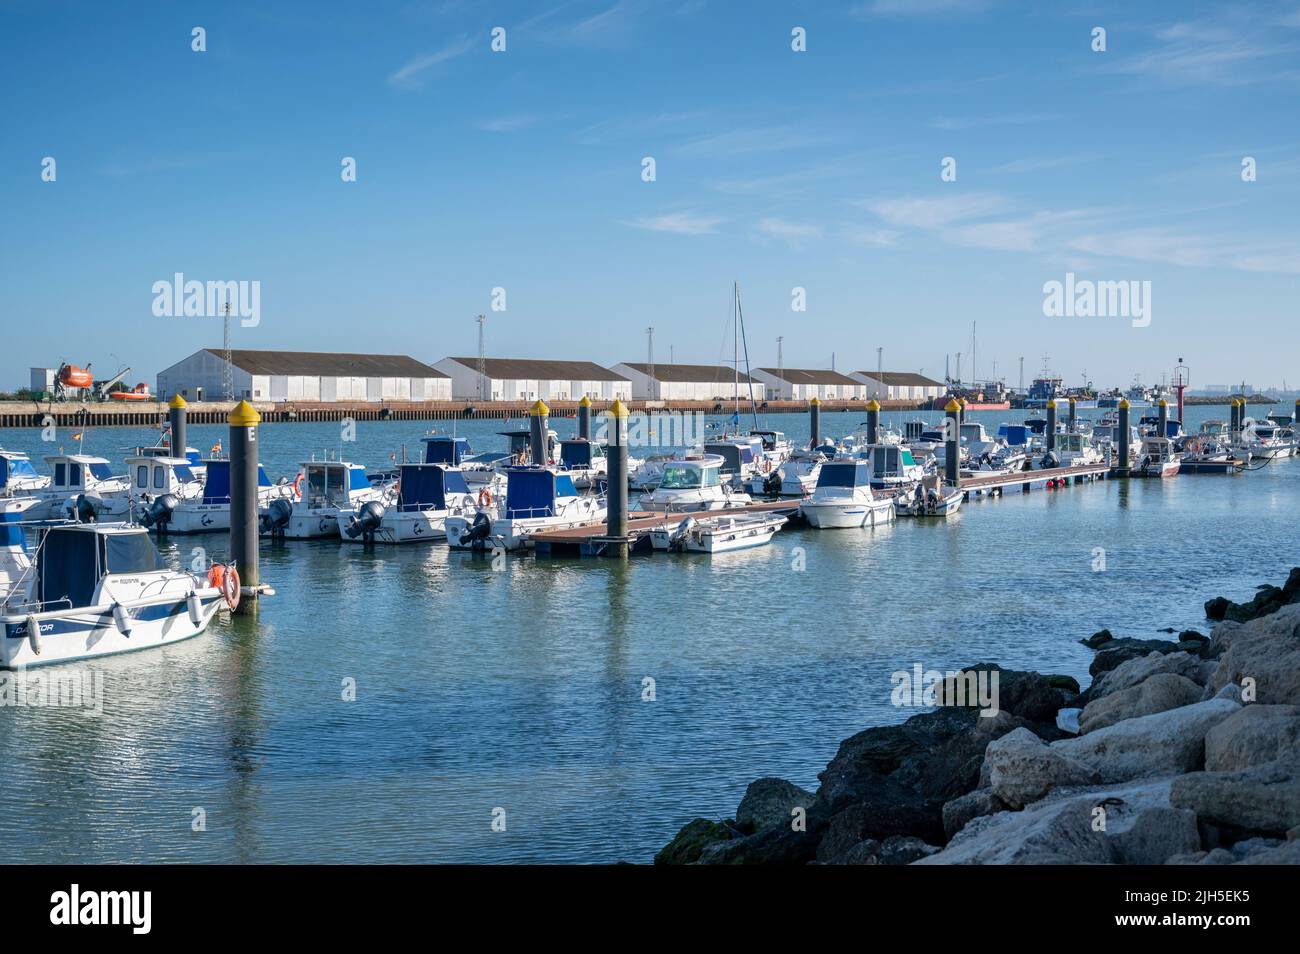 Pleasure boats moored in the marina in the port at Puerto de Santa Maria on the Guadalete river estuary Spain Stock Photo